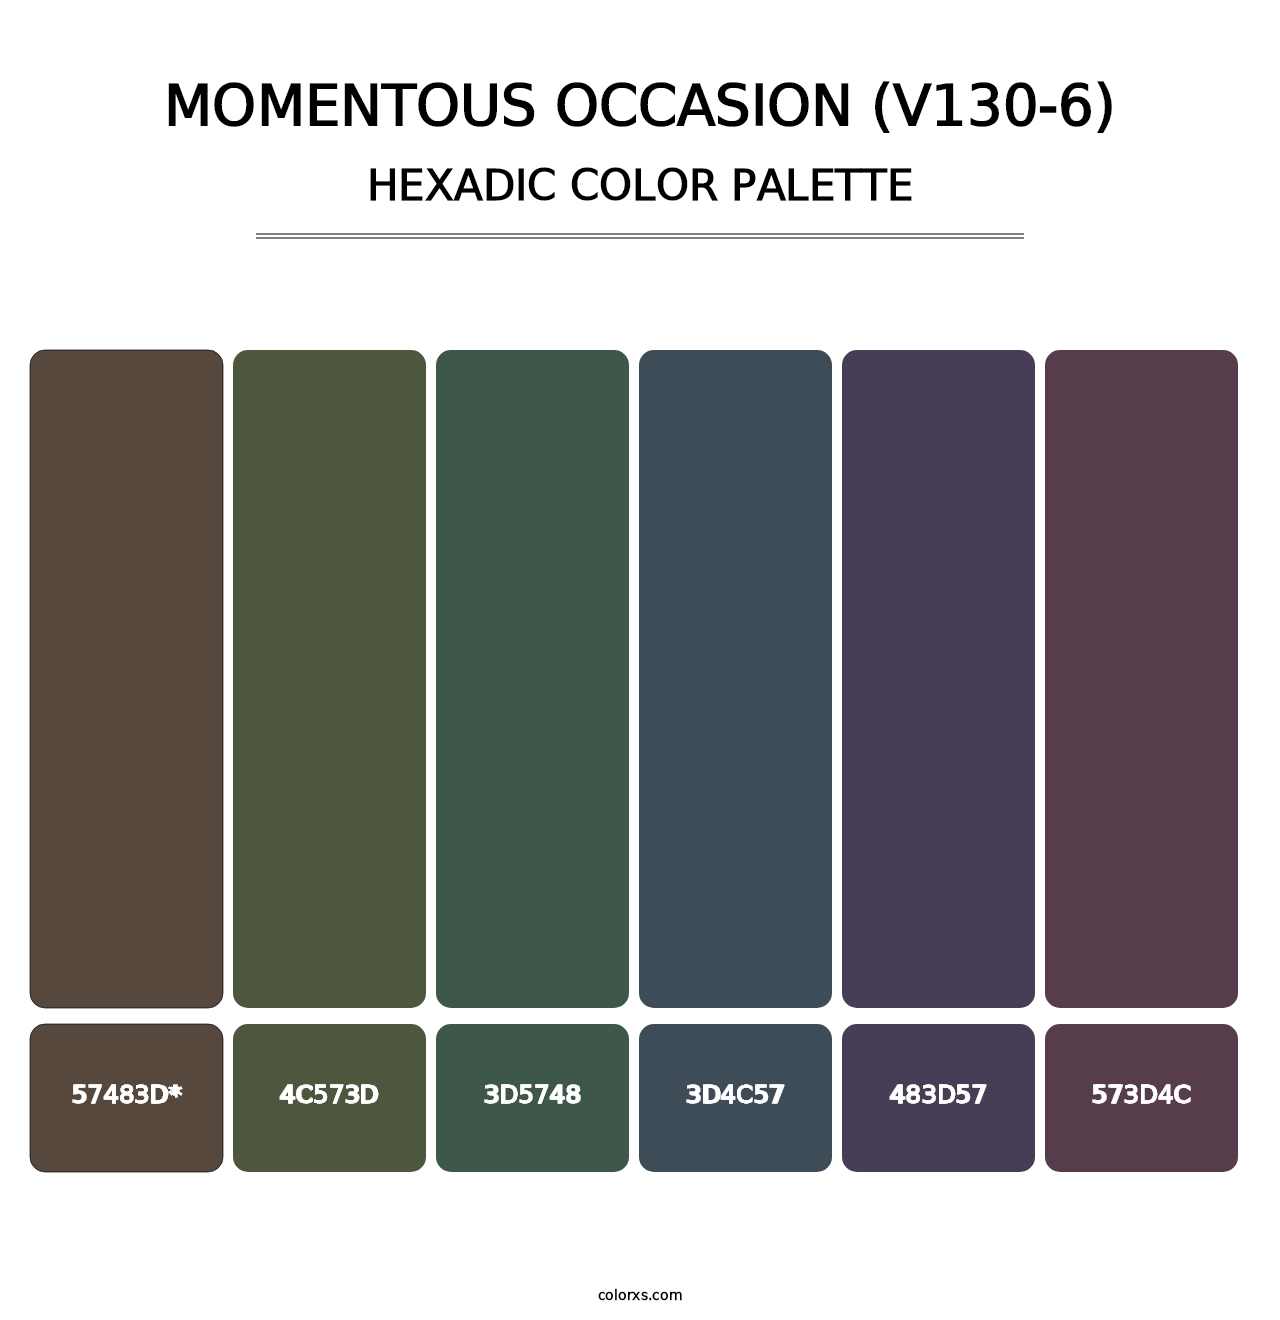 Momentous Occasion (V130-6) - Hexadic Color Palette